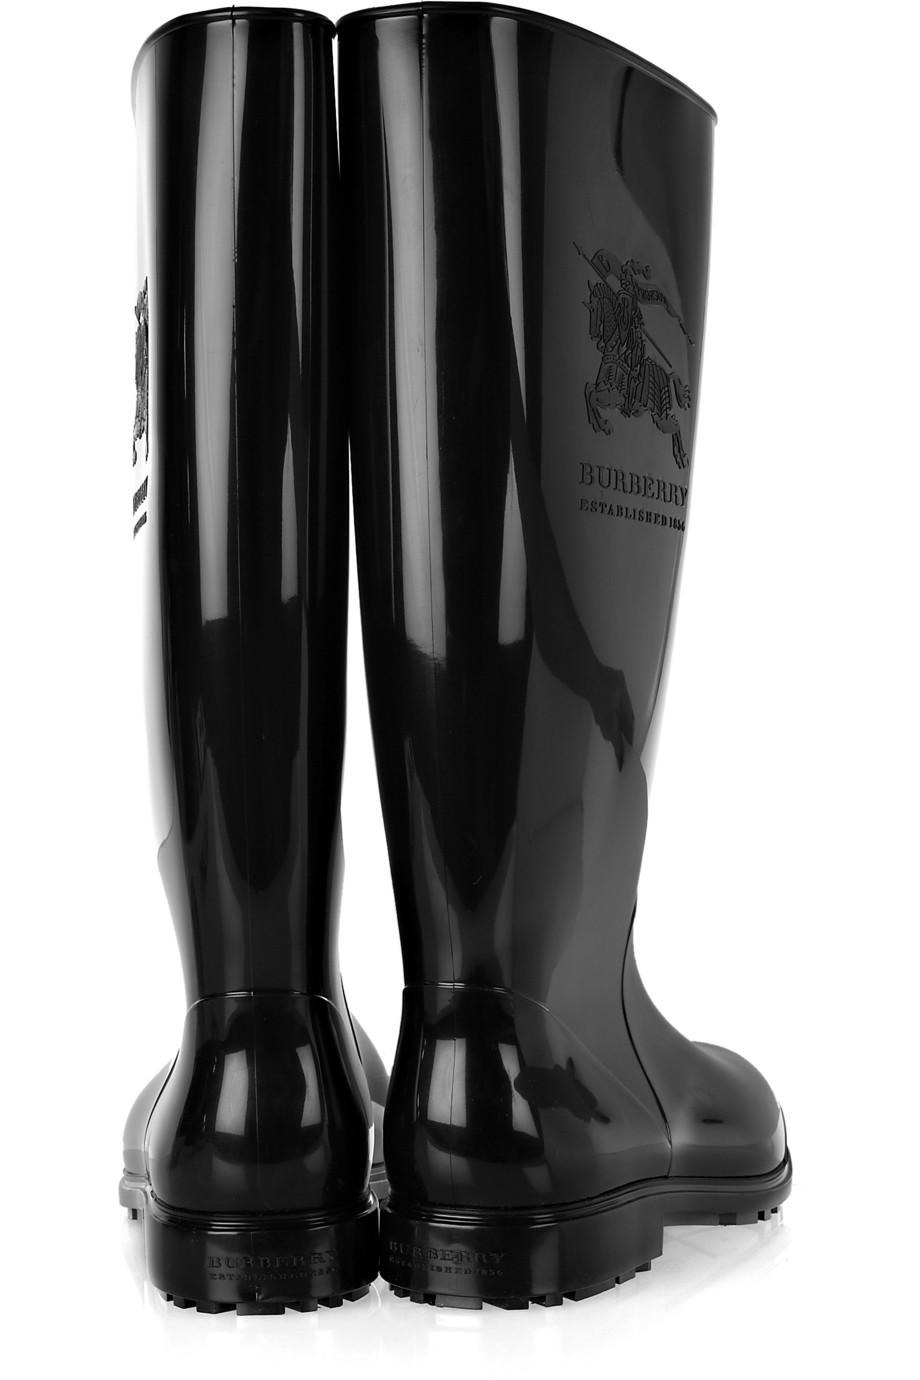 Burberry Emblem Wellington Boots in Black - Lyst